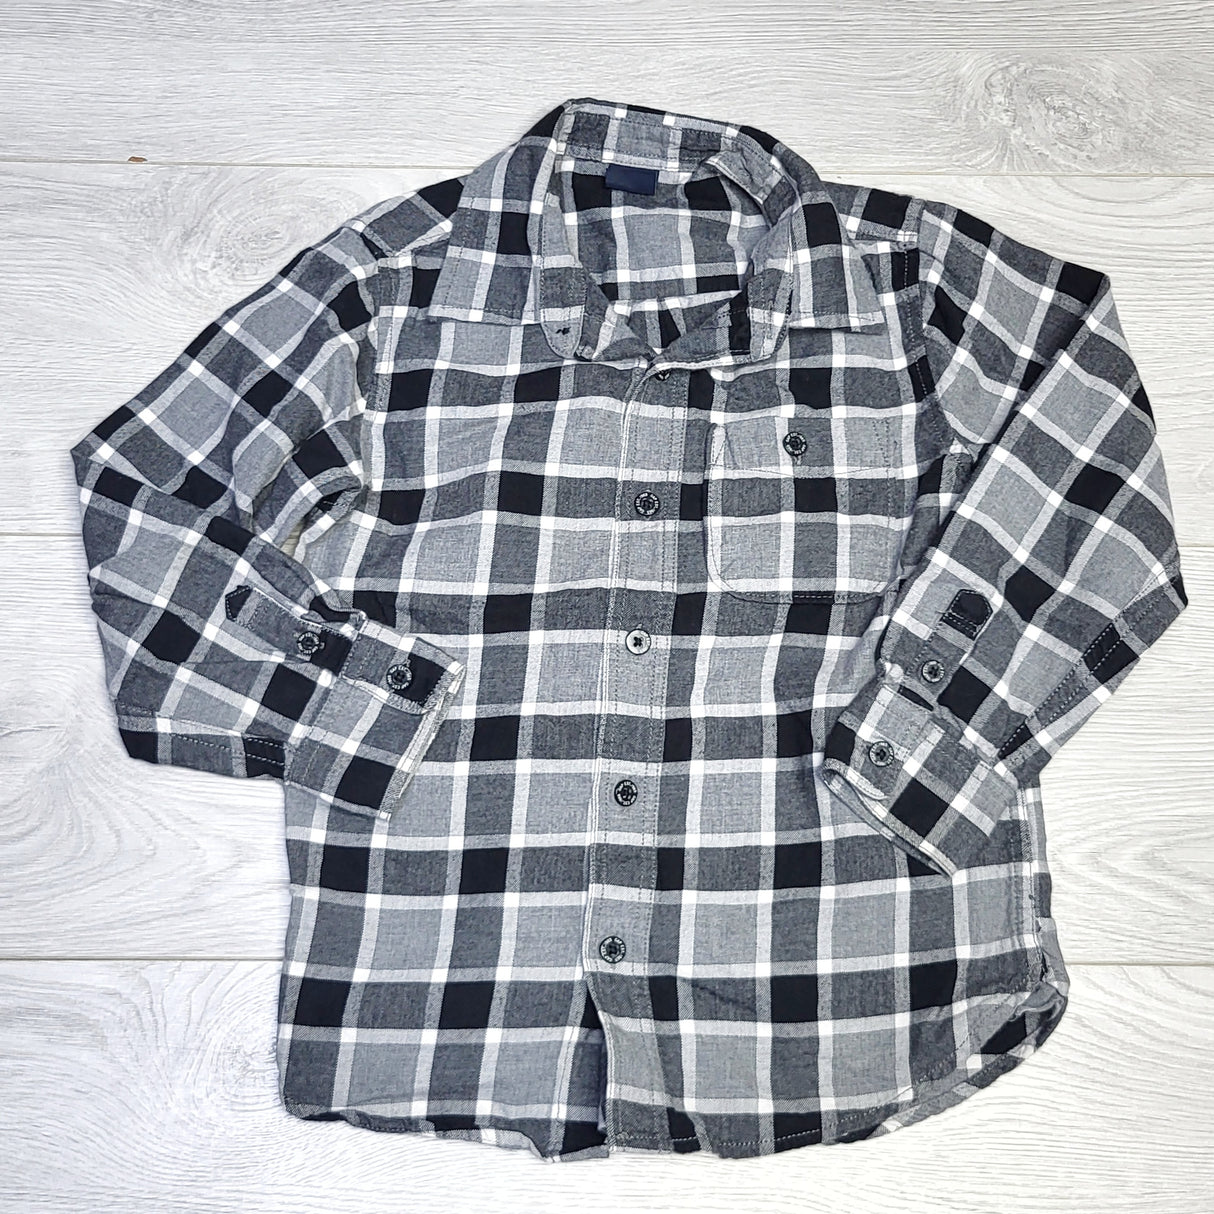 KJHN1 - Gap black and grey plaid button down shirt. Size 5T